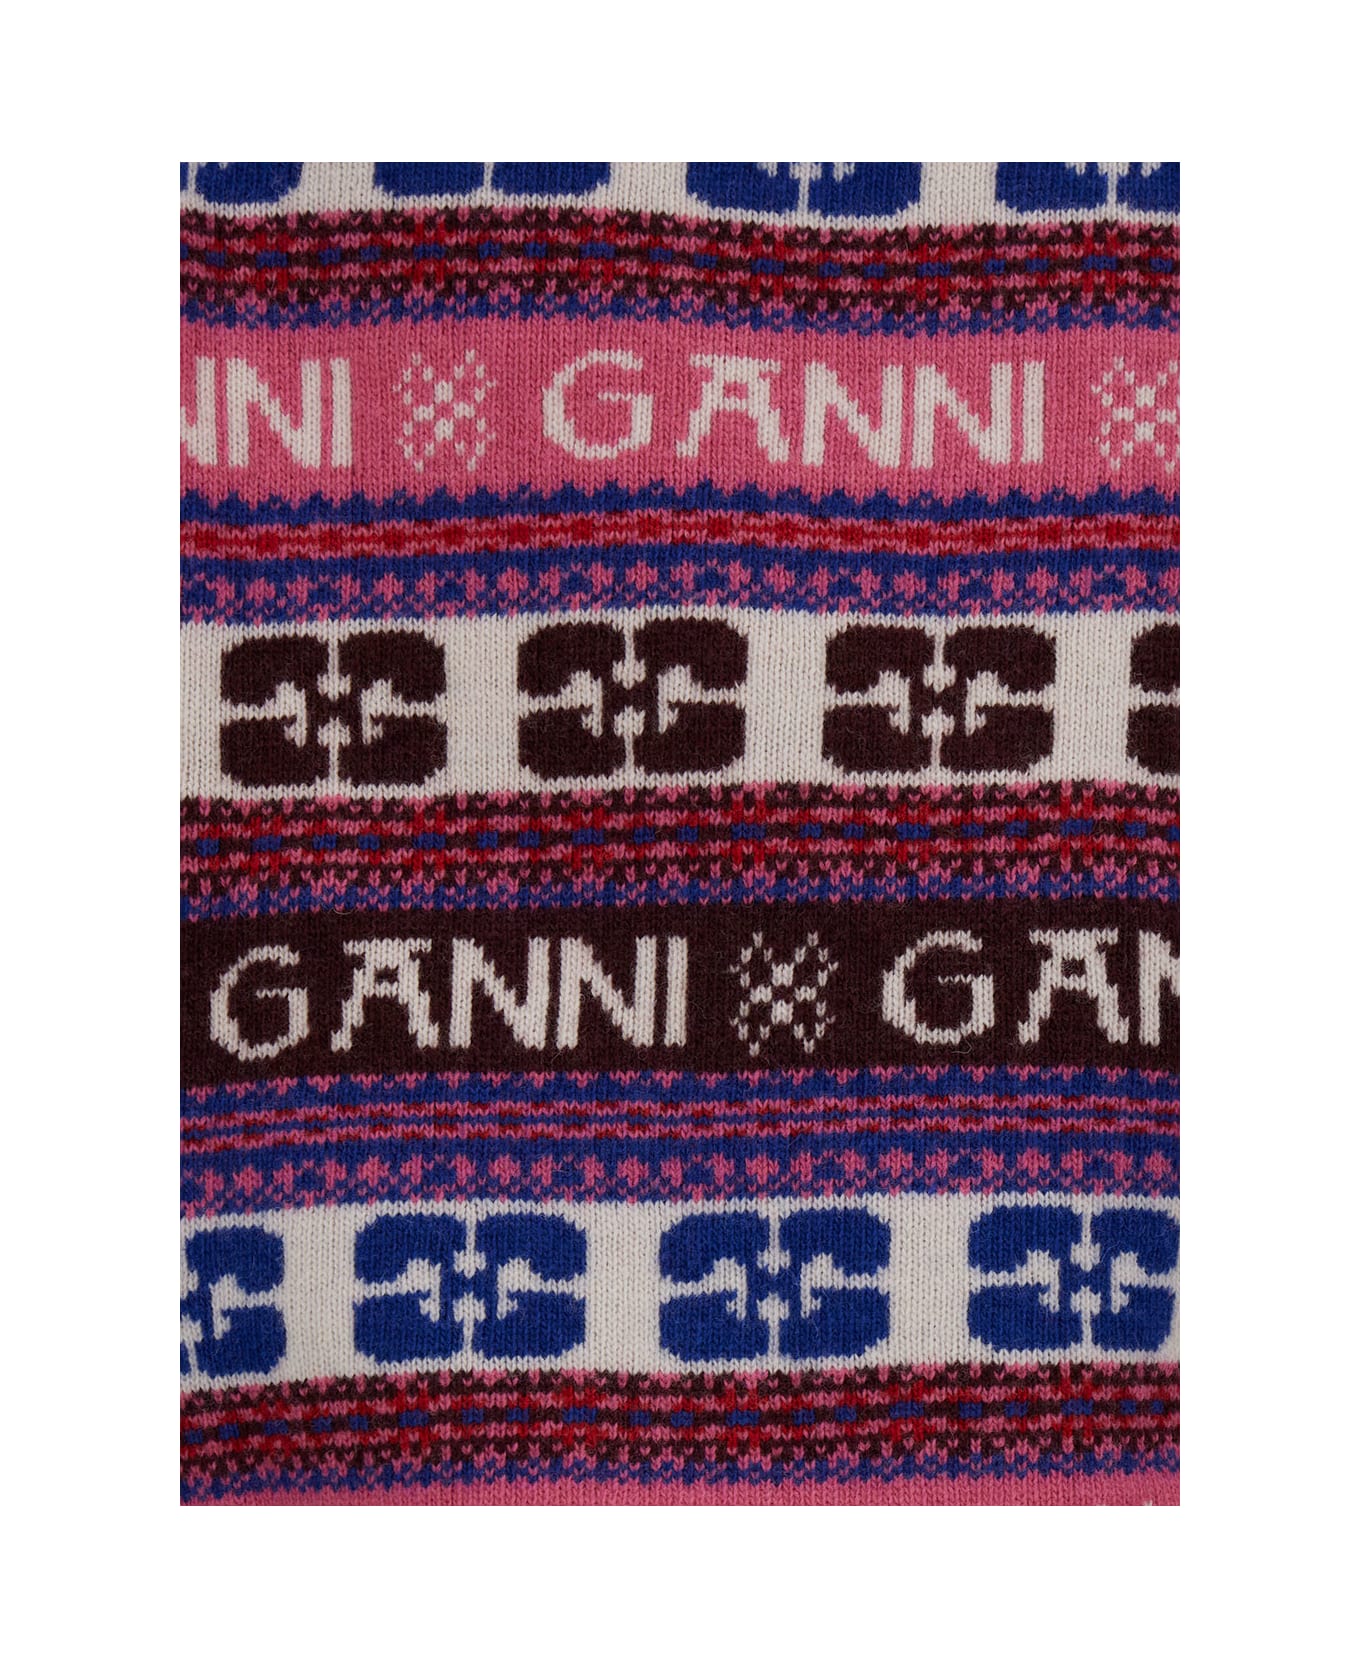 Ganni Multicolor Wool Knitwear - Multicolor ニットウェア